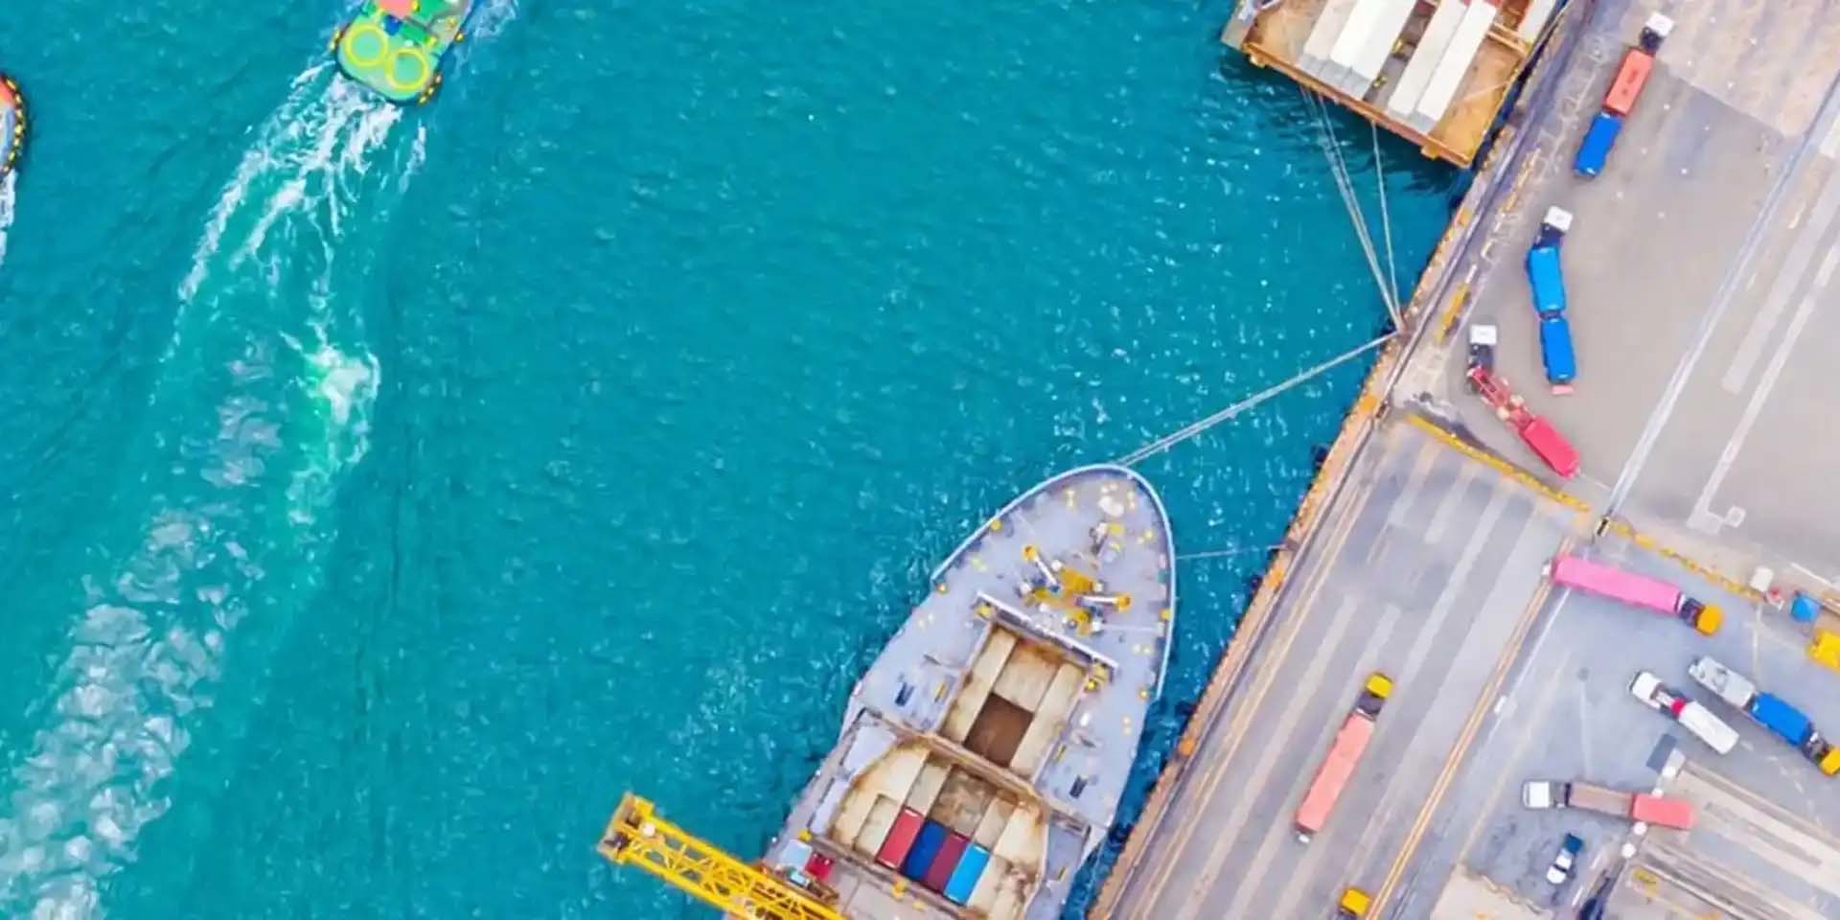 Port energy supply for green shipping corridors